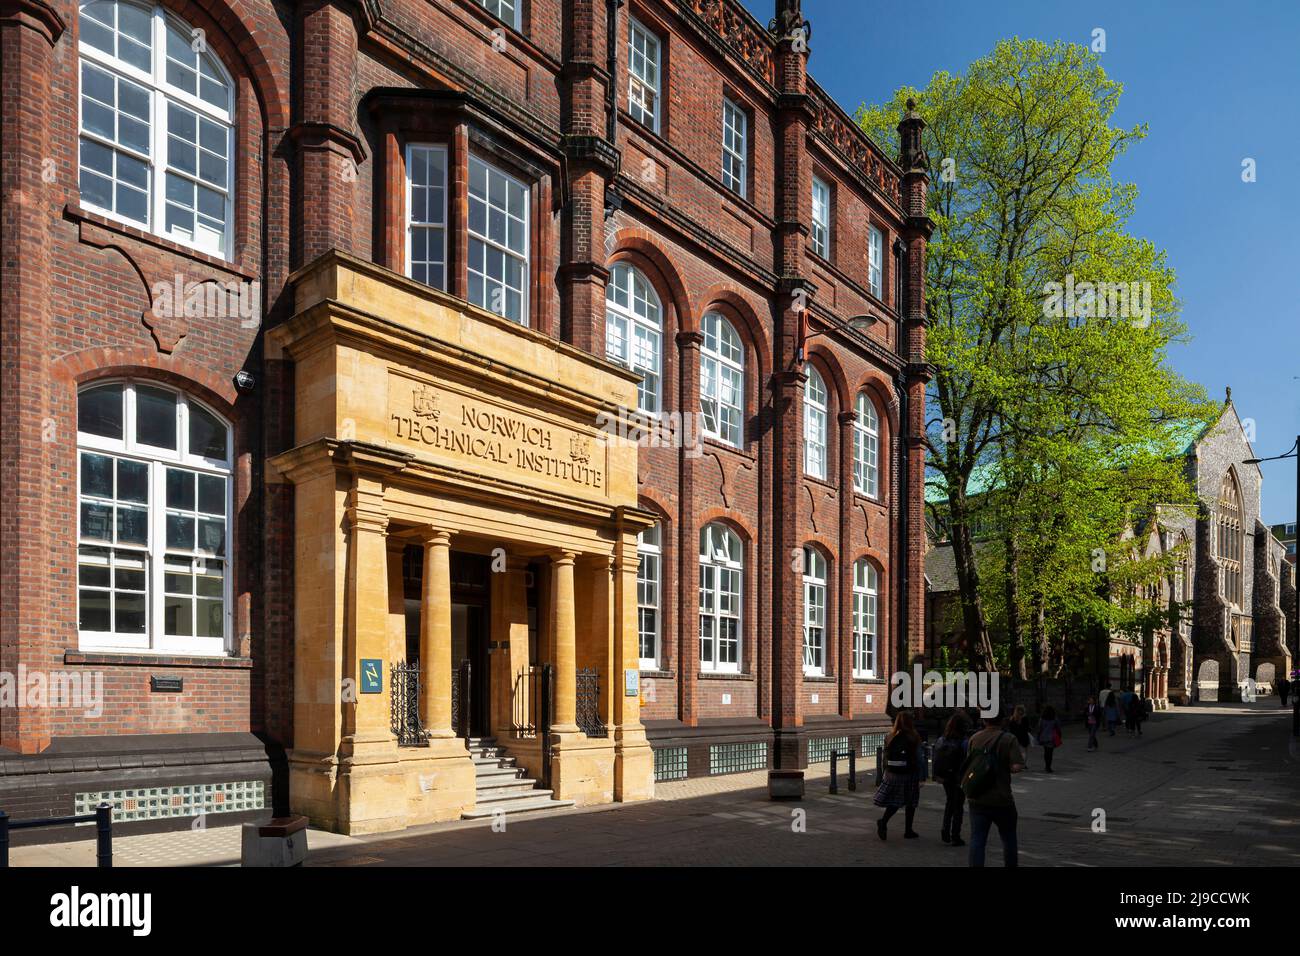 Norwich Technical Institute. Stock Photo